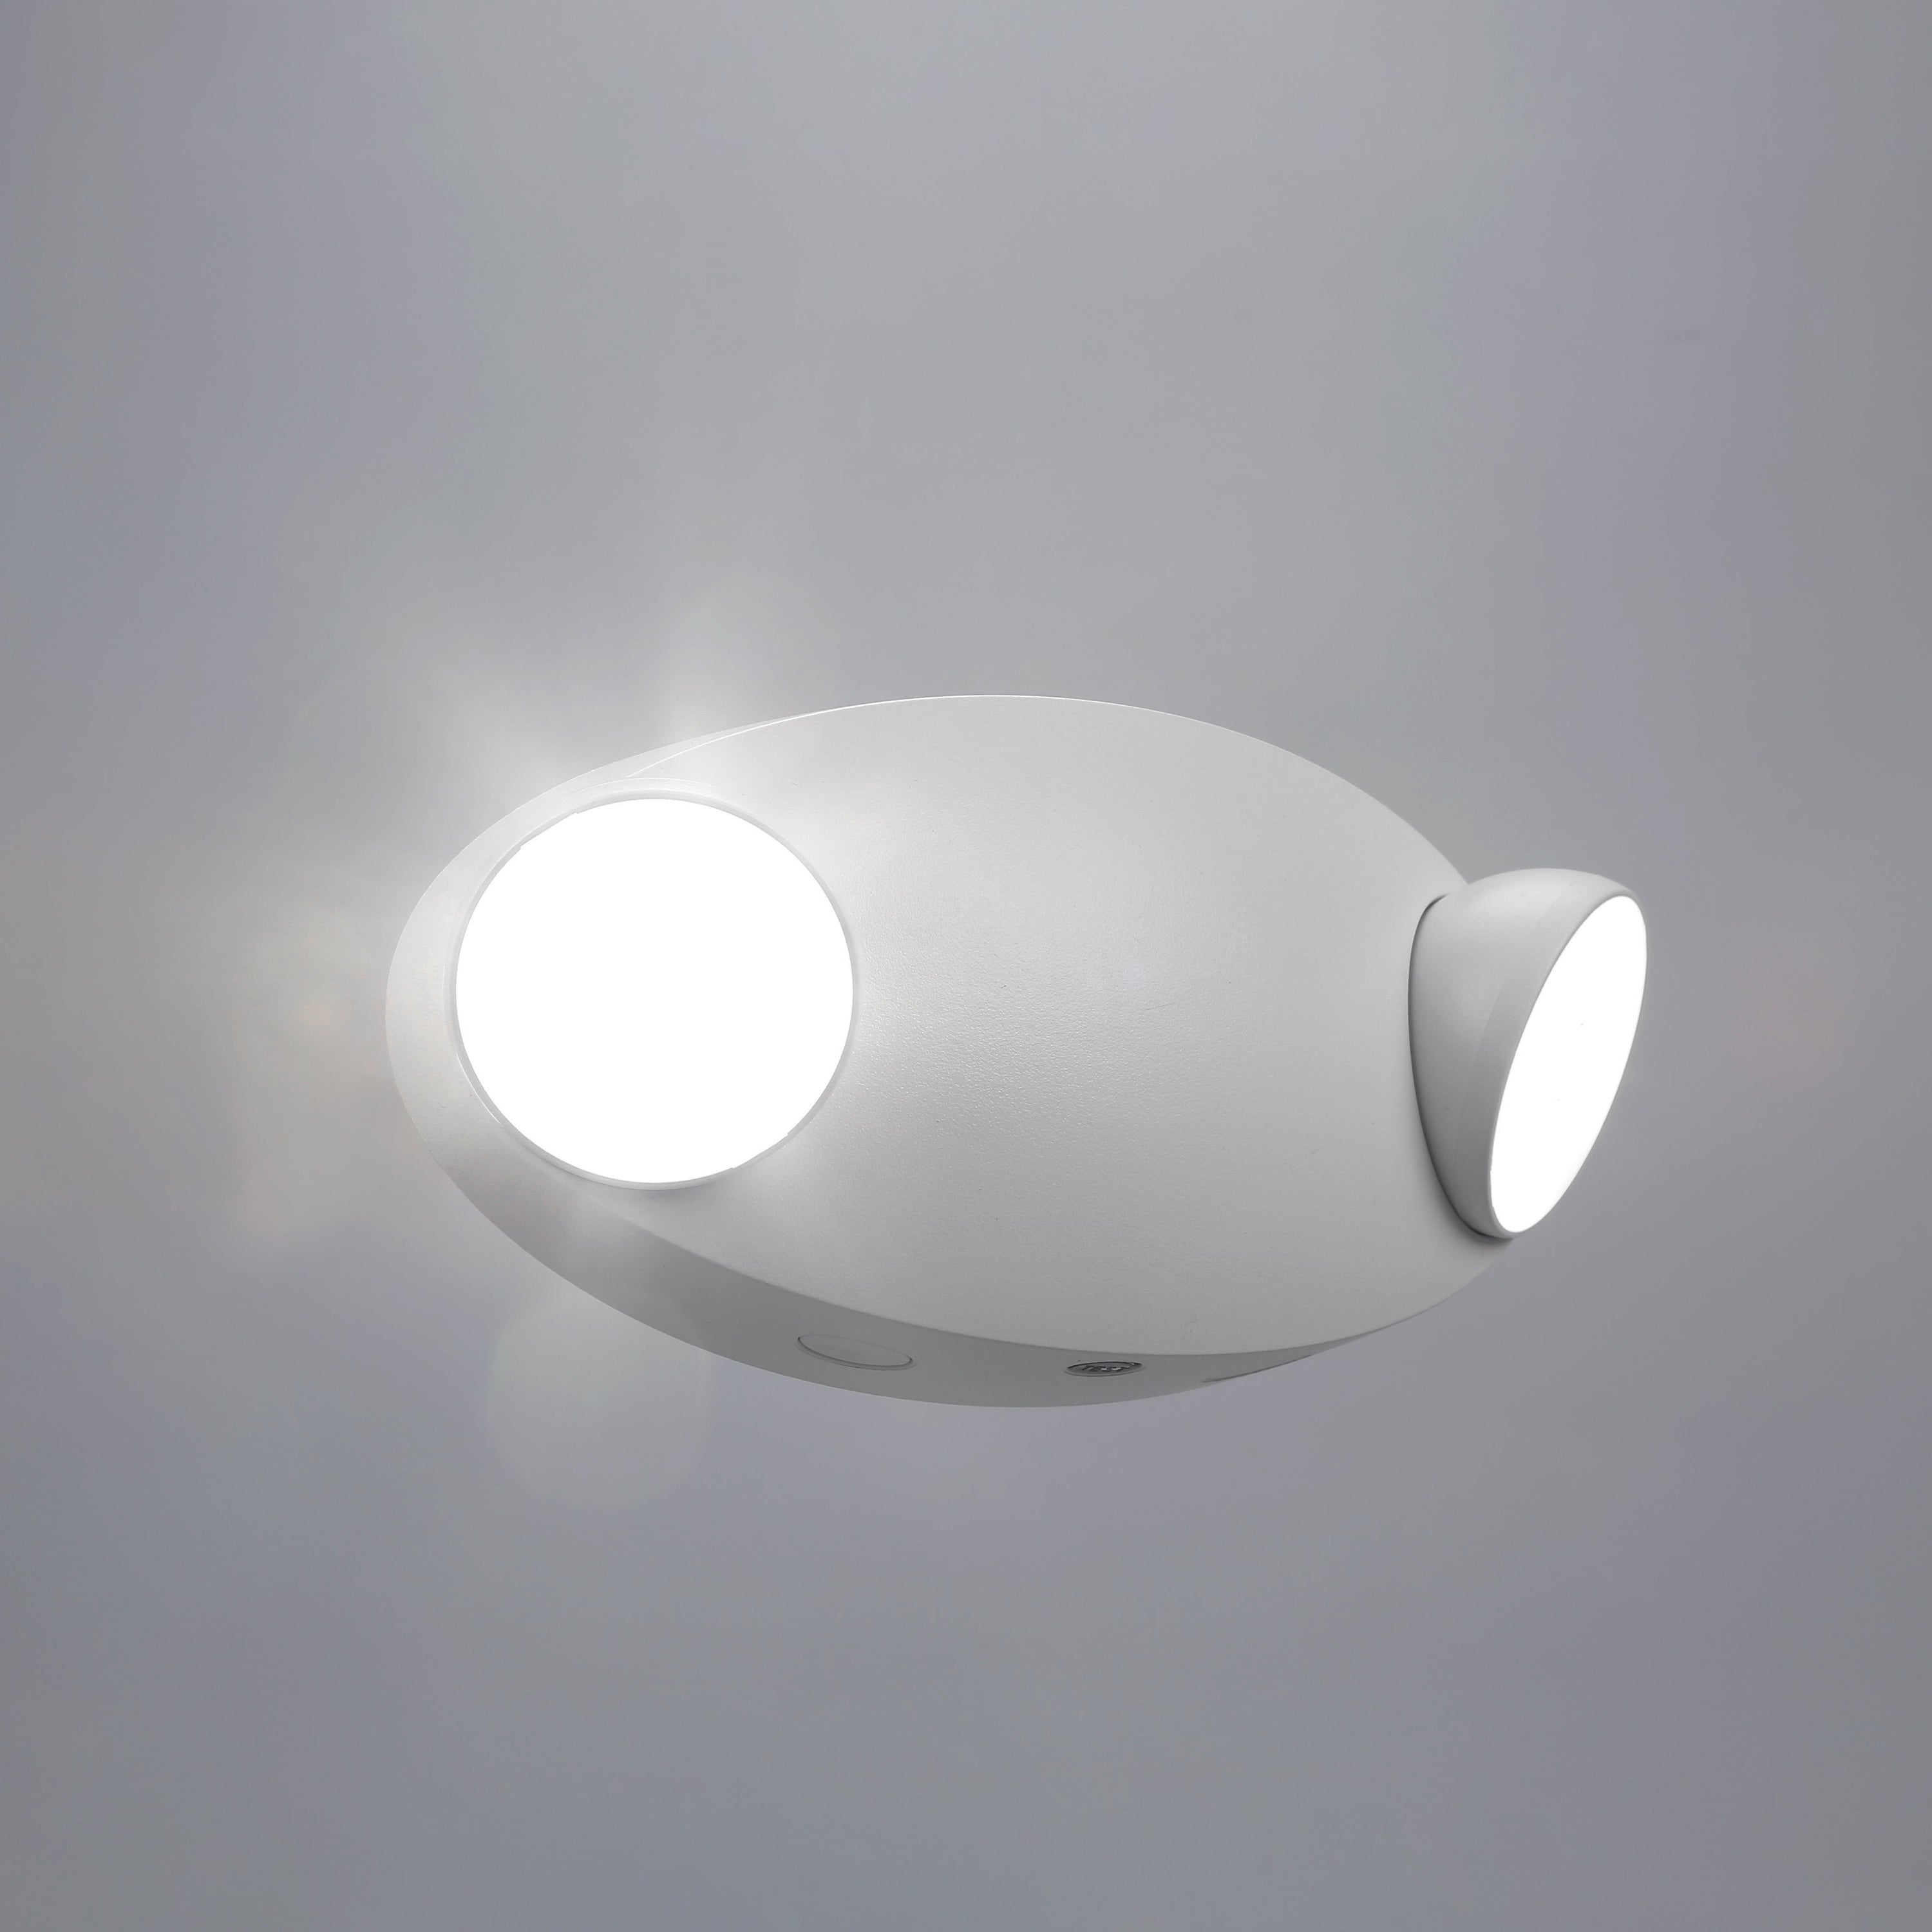 SwiftLit Indoor LED Emergency Light - Adjustable Dual-head